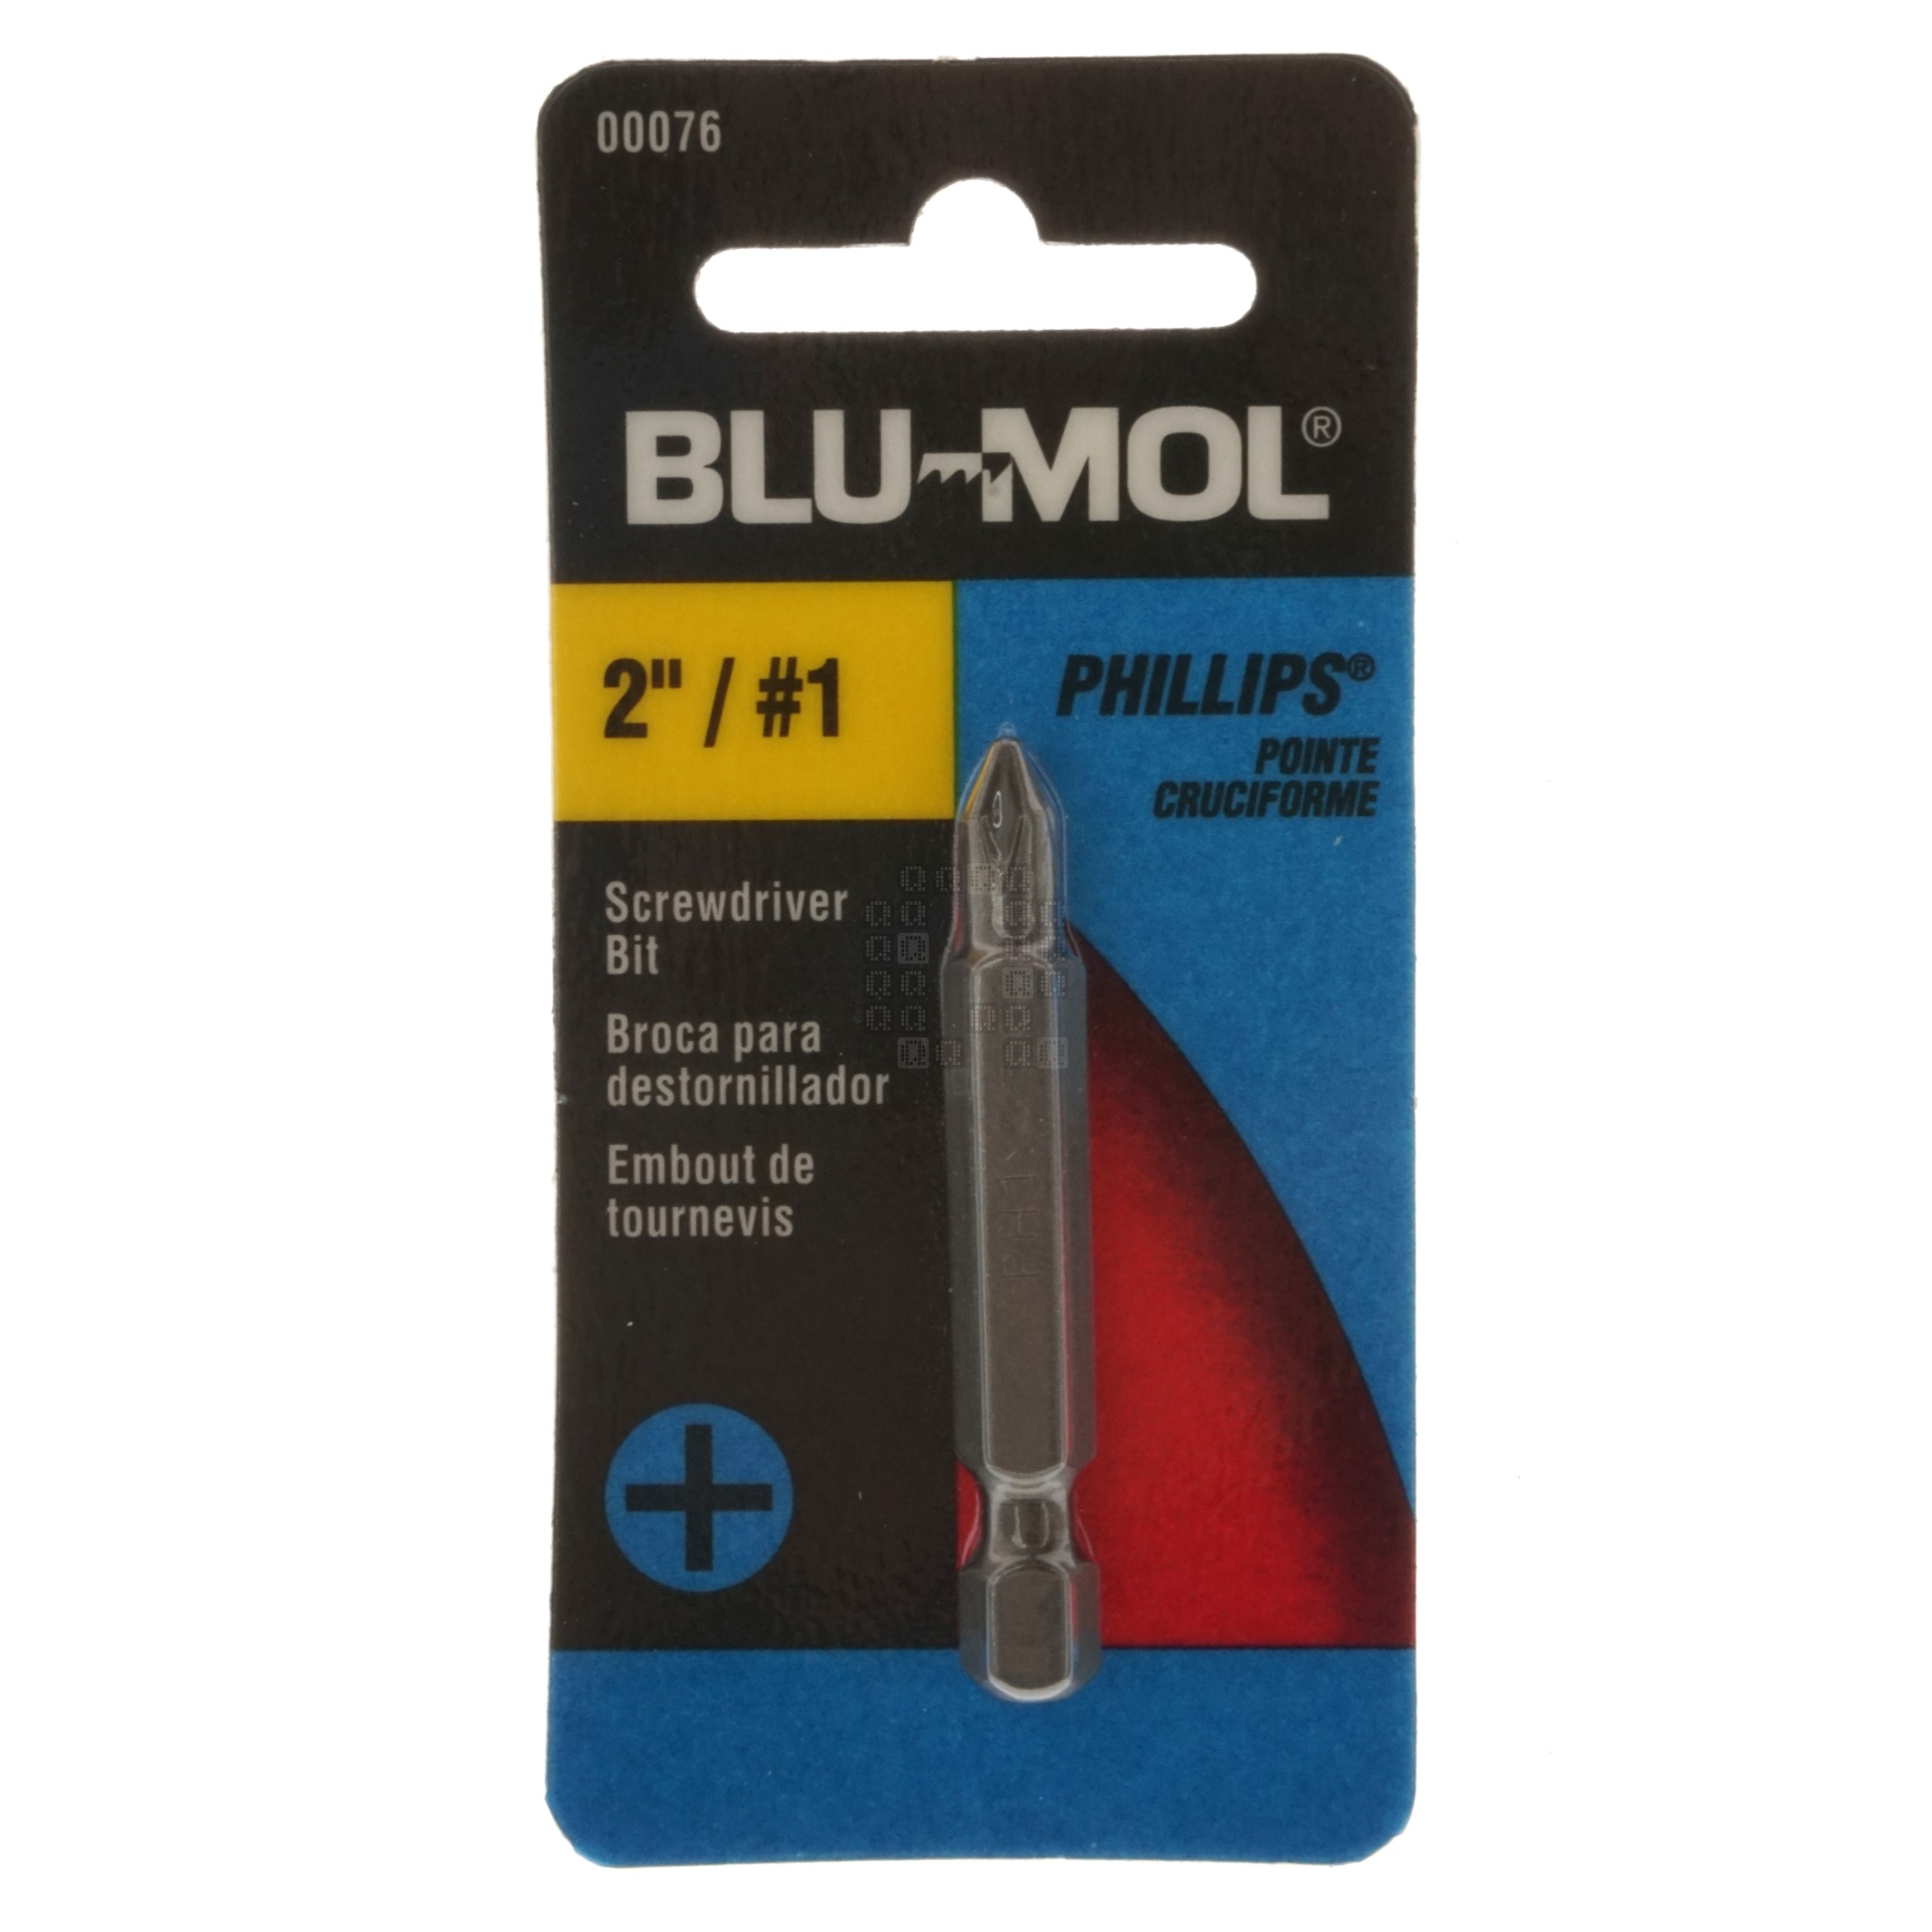 BLU-MOL 00076 PH1 / #1 Phillips Screwdriver Bit, 2" Length